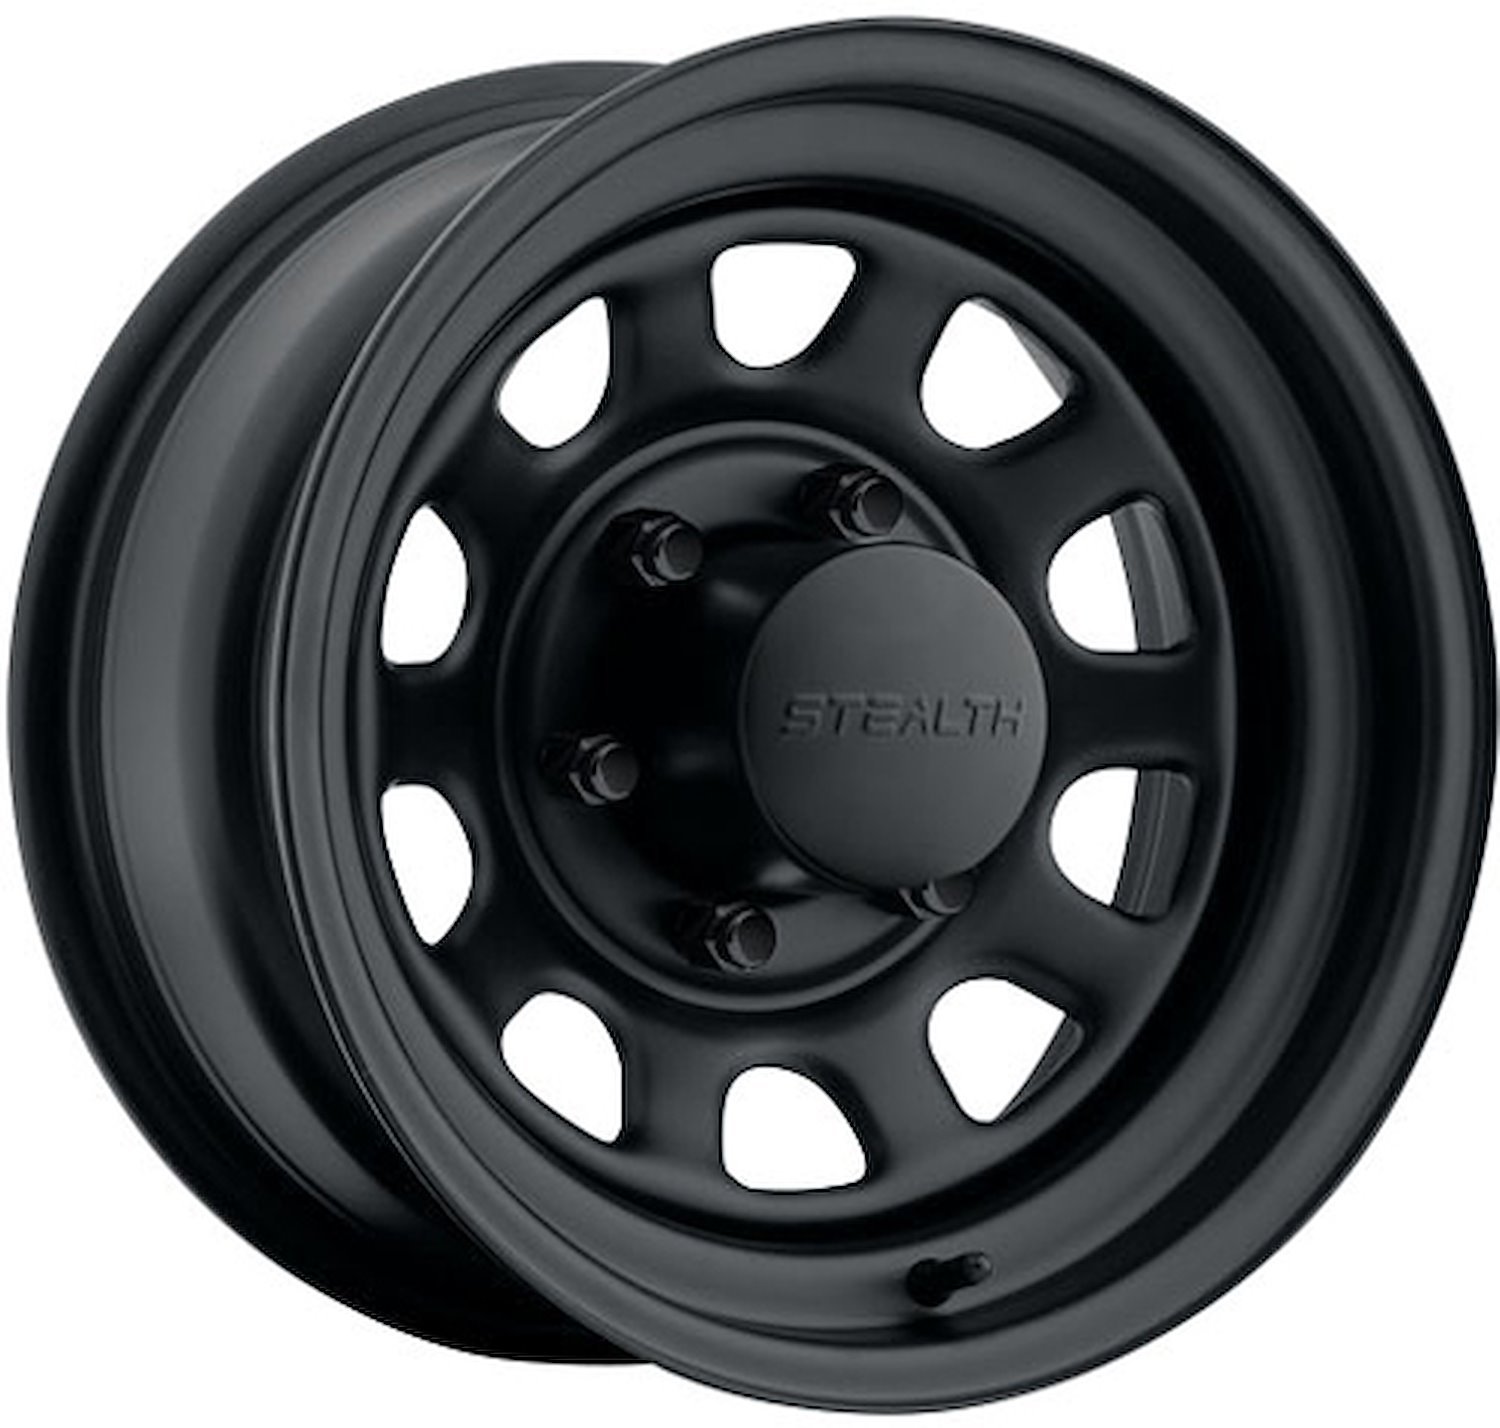 Stealth Black Daytona Wheel (Series 804) Size: 15" x 7"